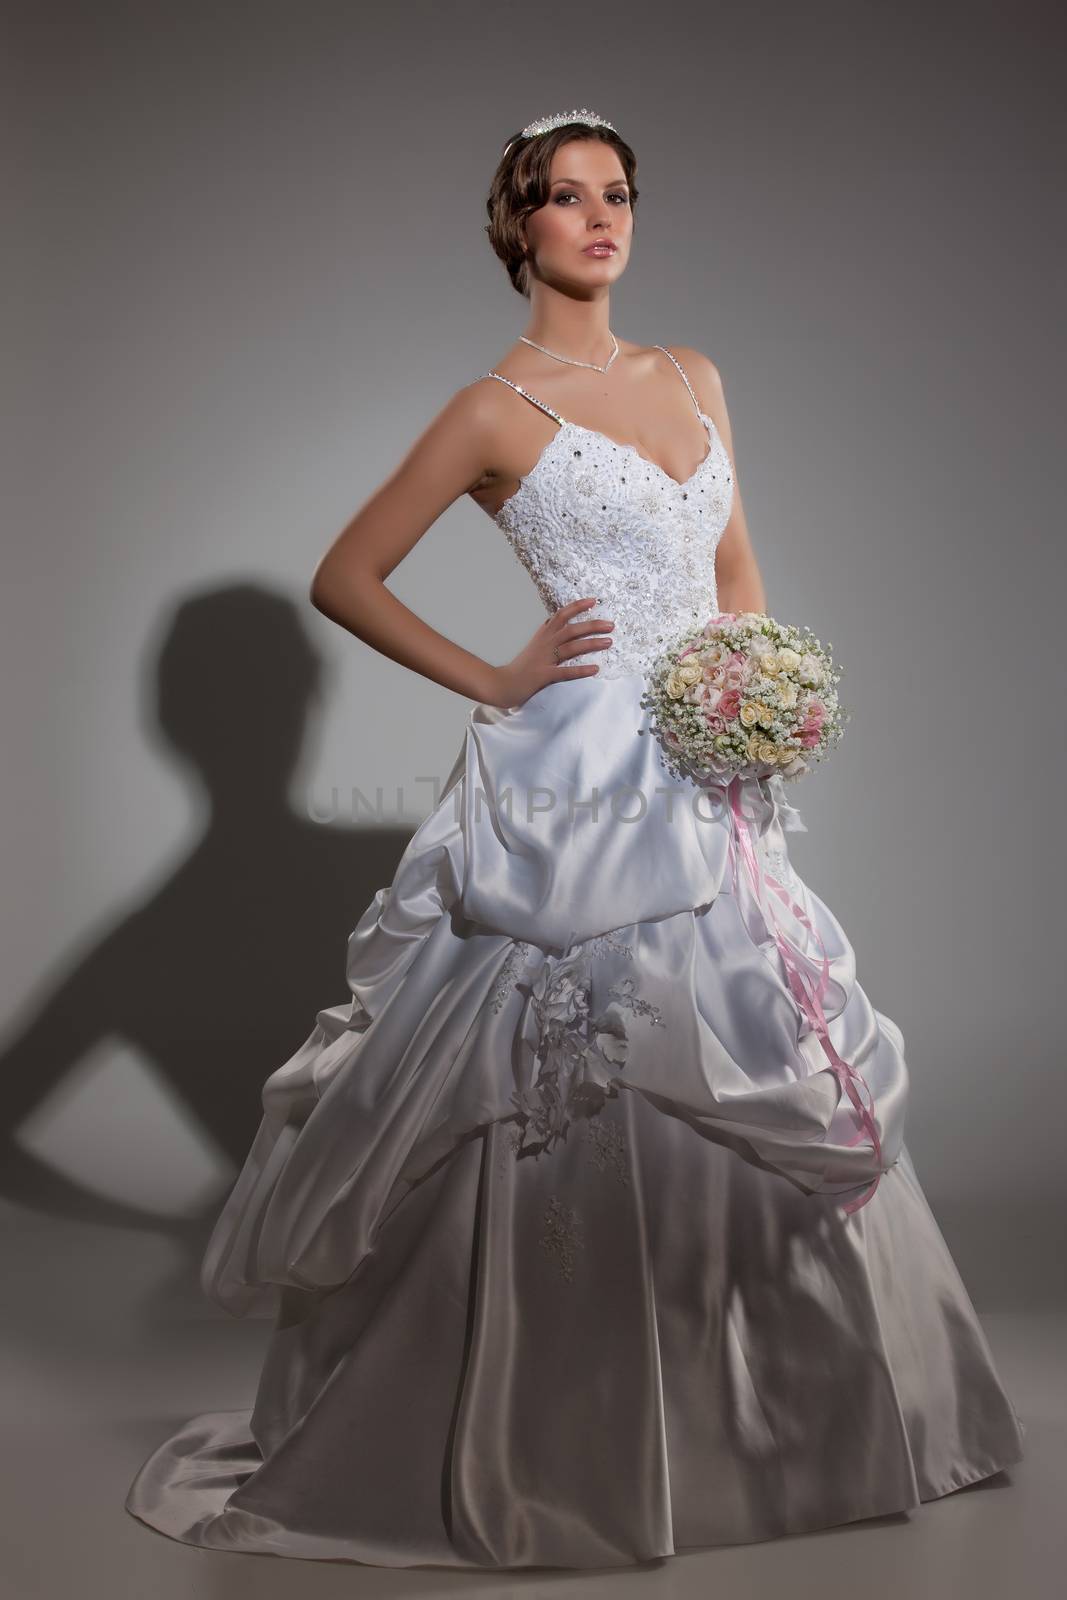 Young beautiful woman in a wedding dress